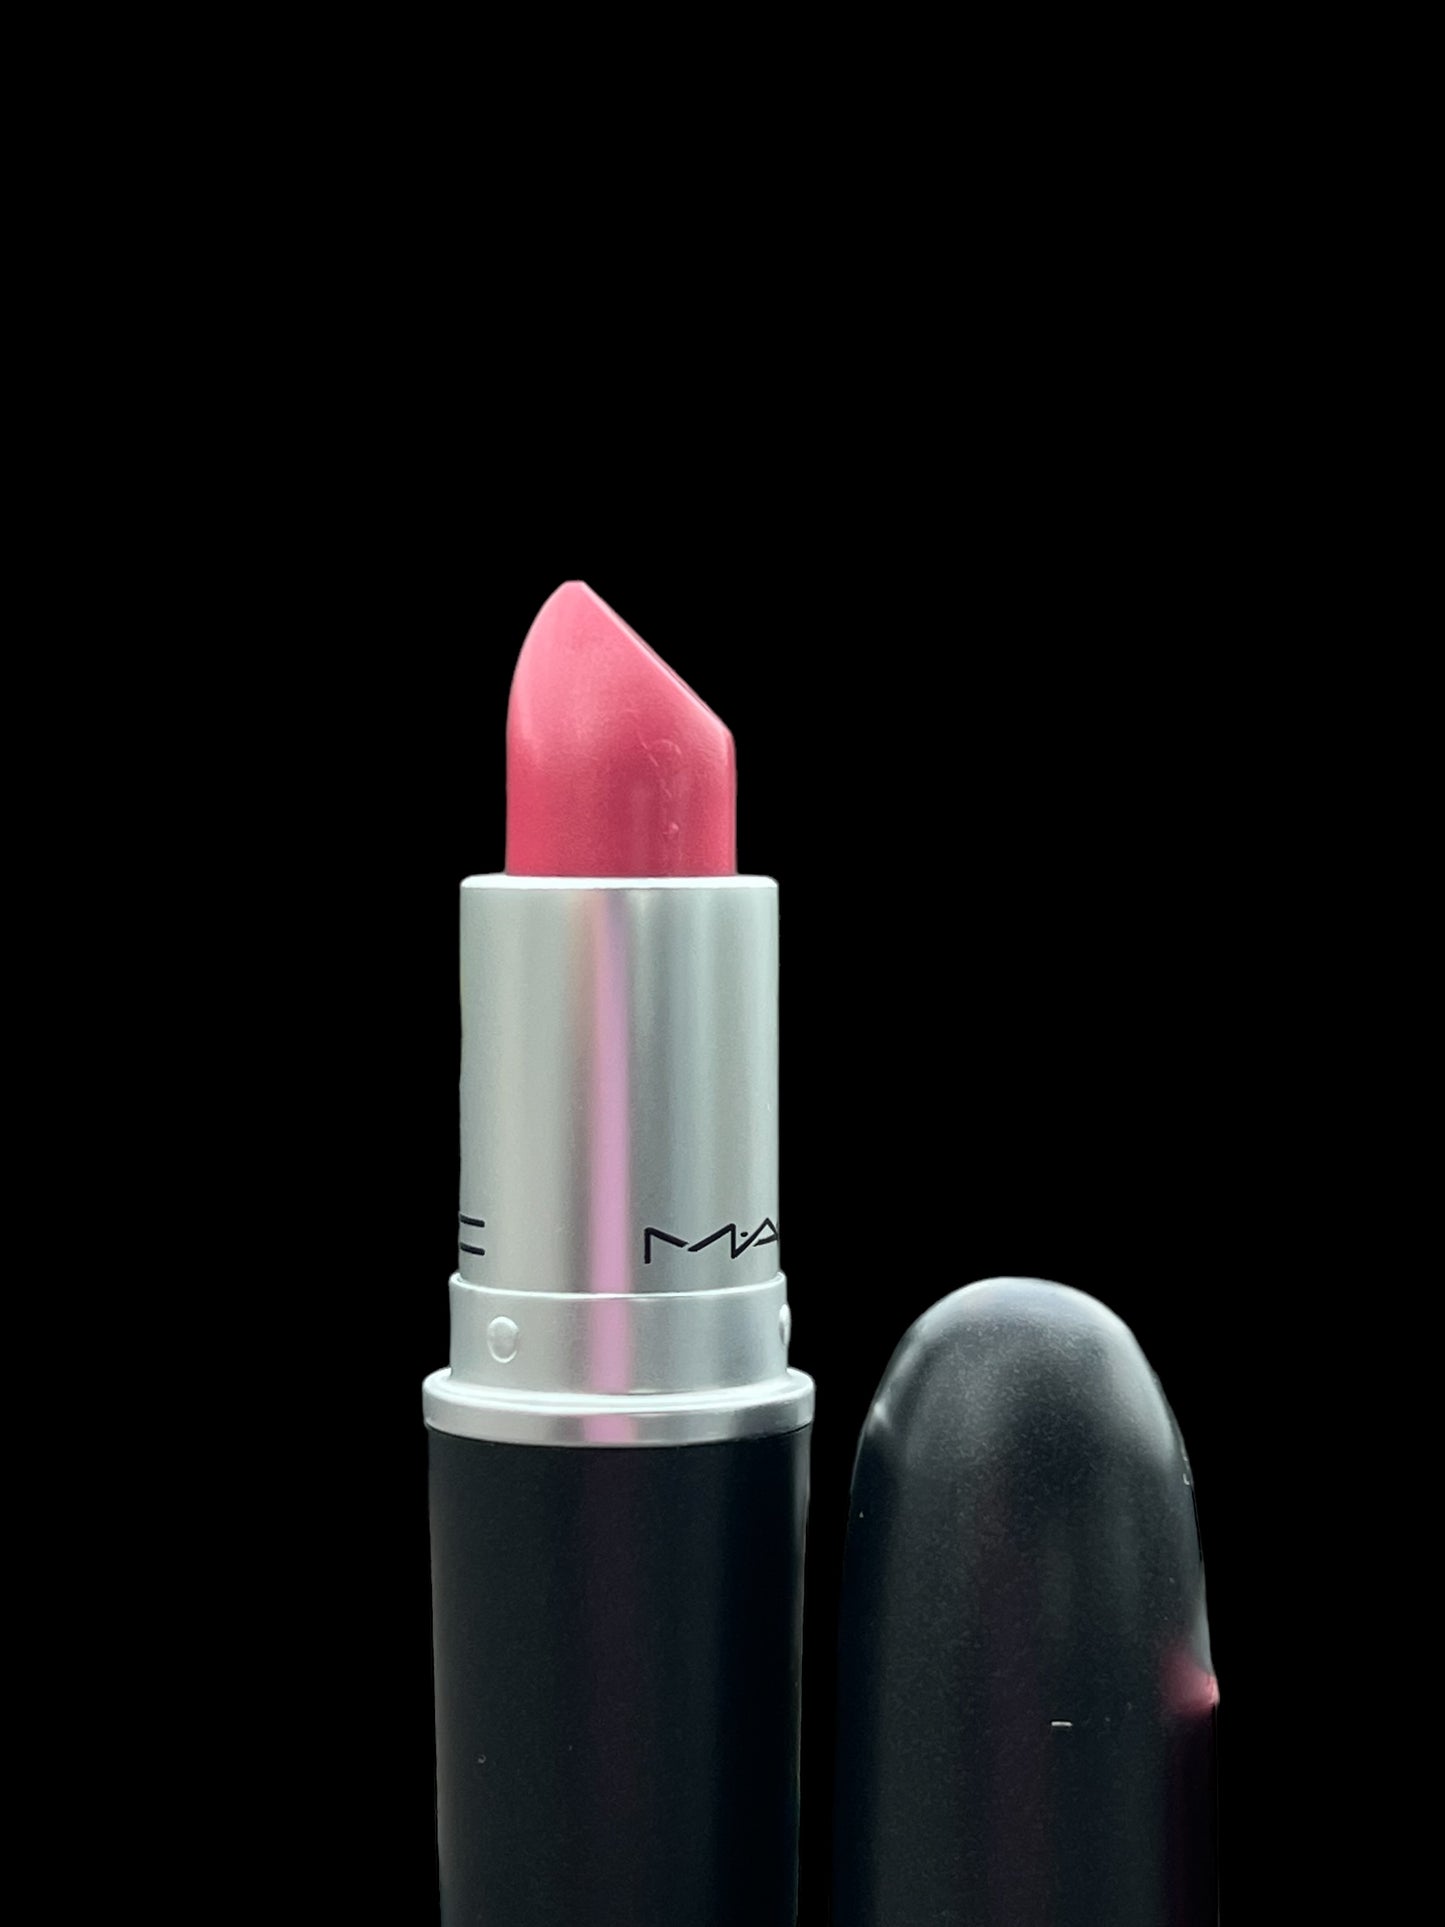 MAC FROST Lipstick in Bombshell